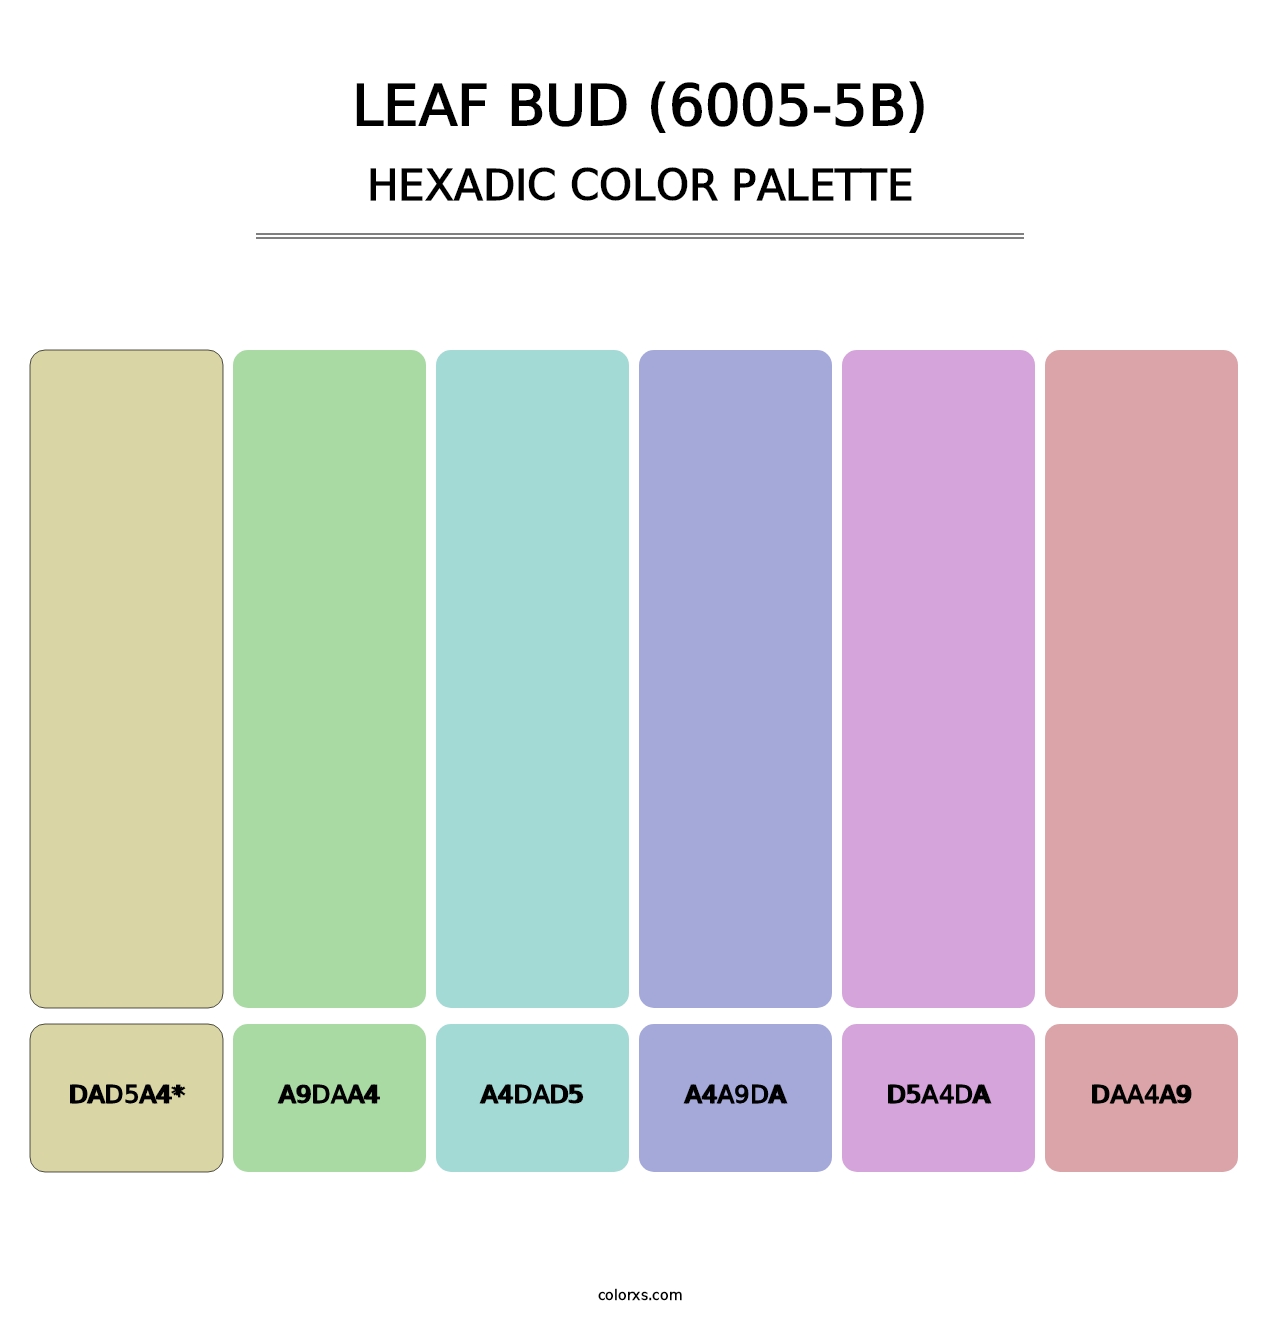 Leaf Bud (6005-5B) - Hexadic Color Palette